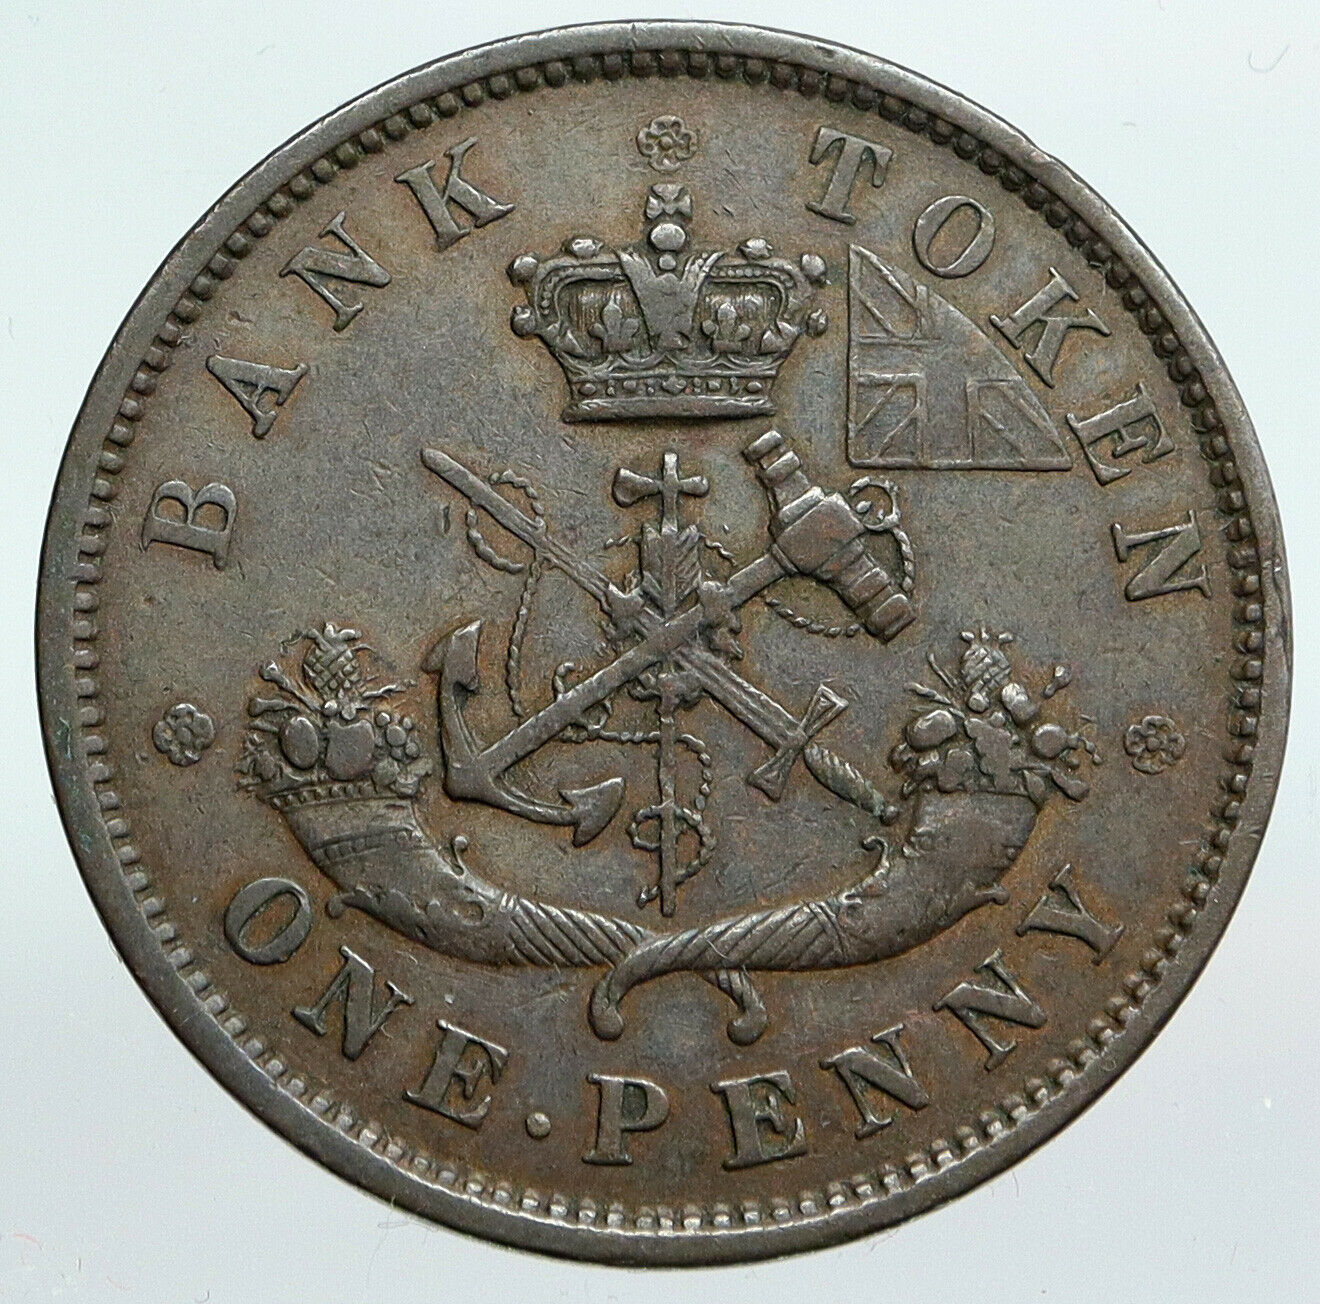 1850 UPPER CANADA Antique UK Queen Victoria Time PENNY BANK TOKEN Coin i90355